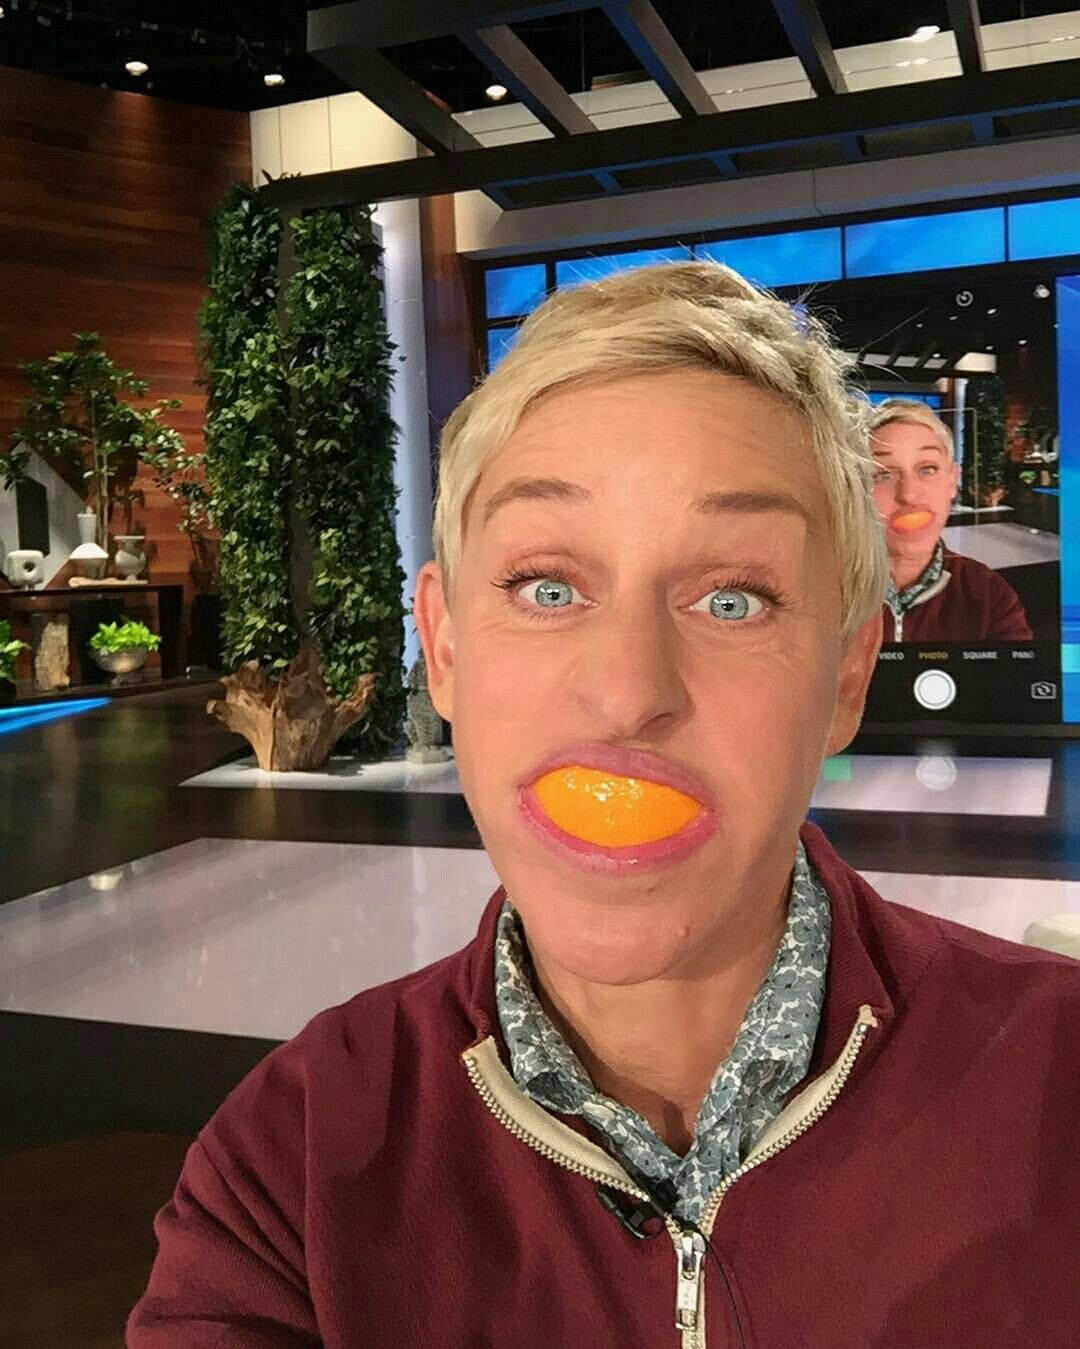 The Ellen Show Host Funny Selfie Background